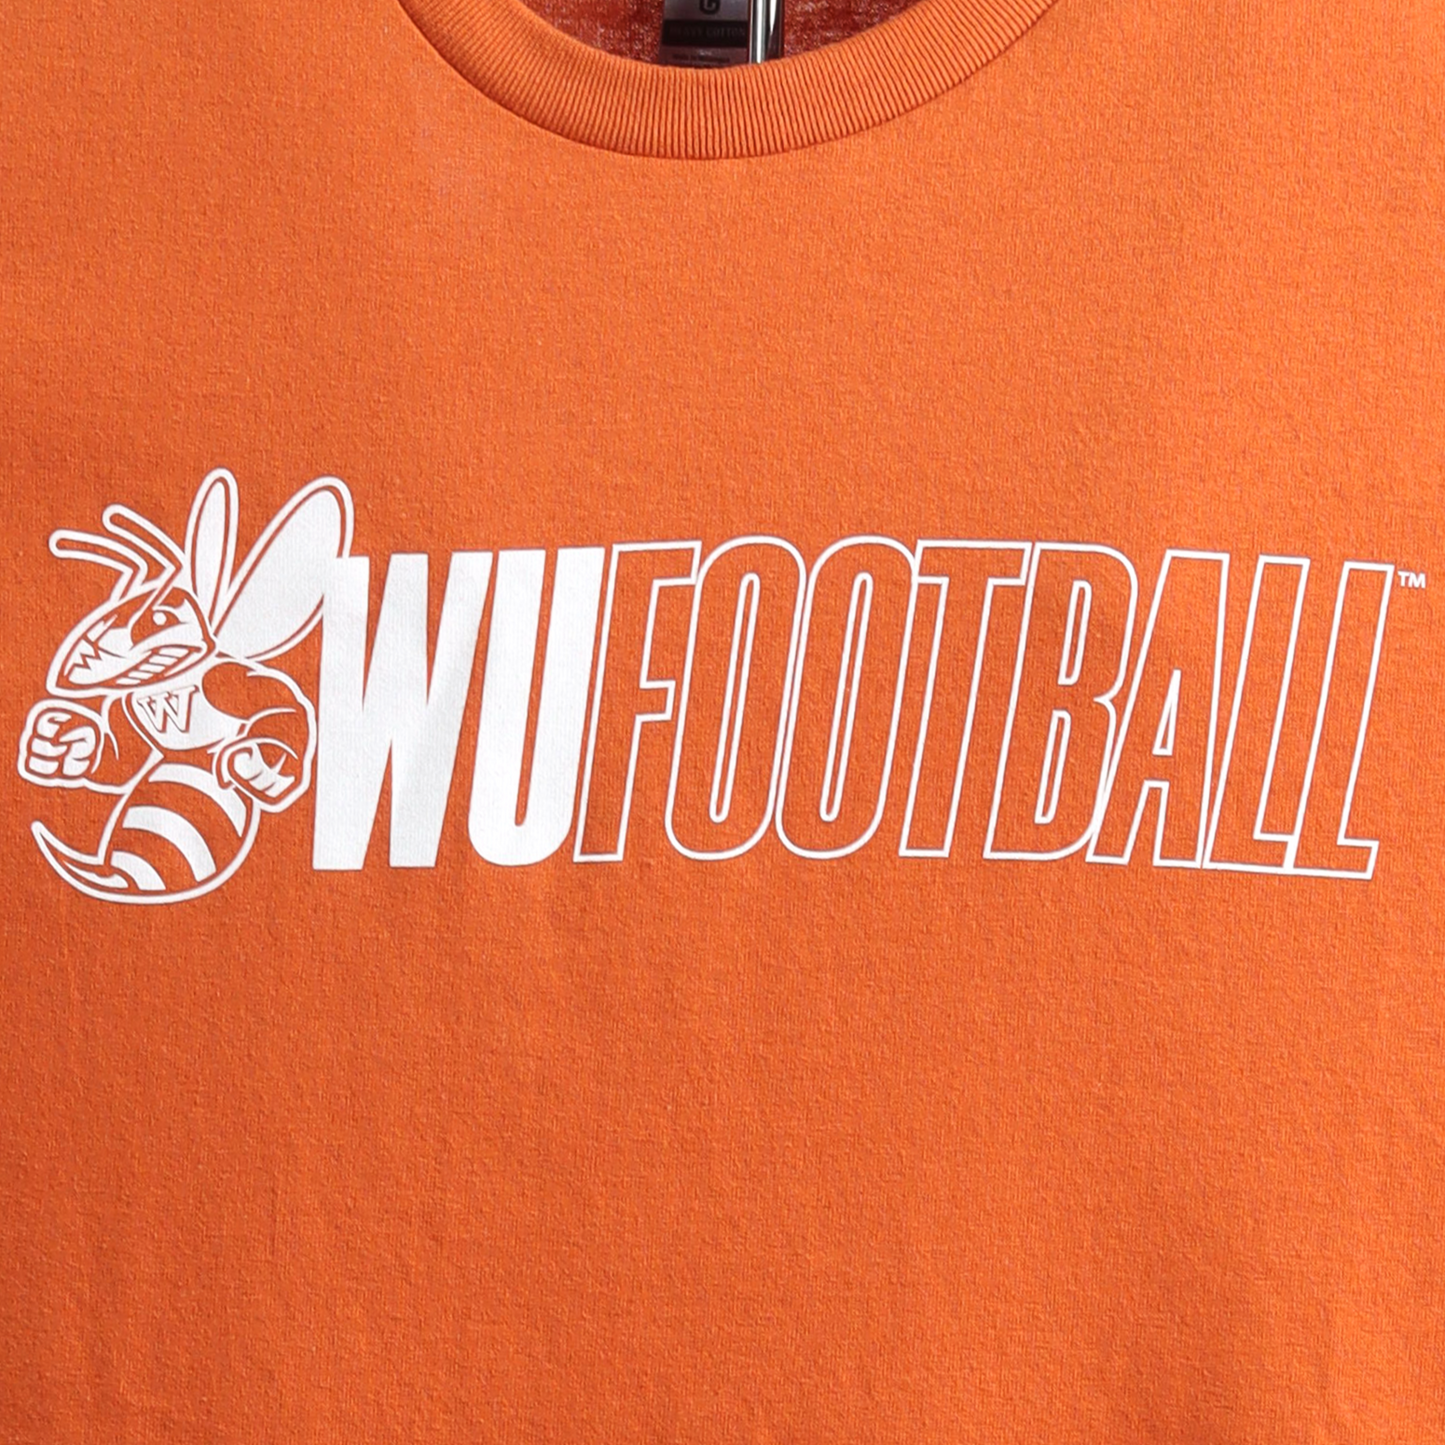 WU Football T-shirt Orange